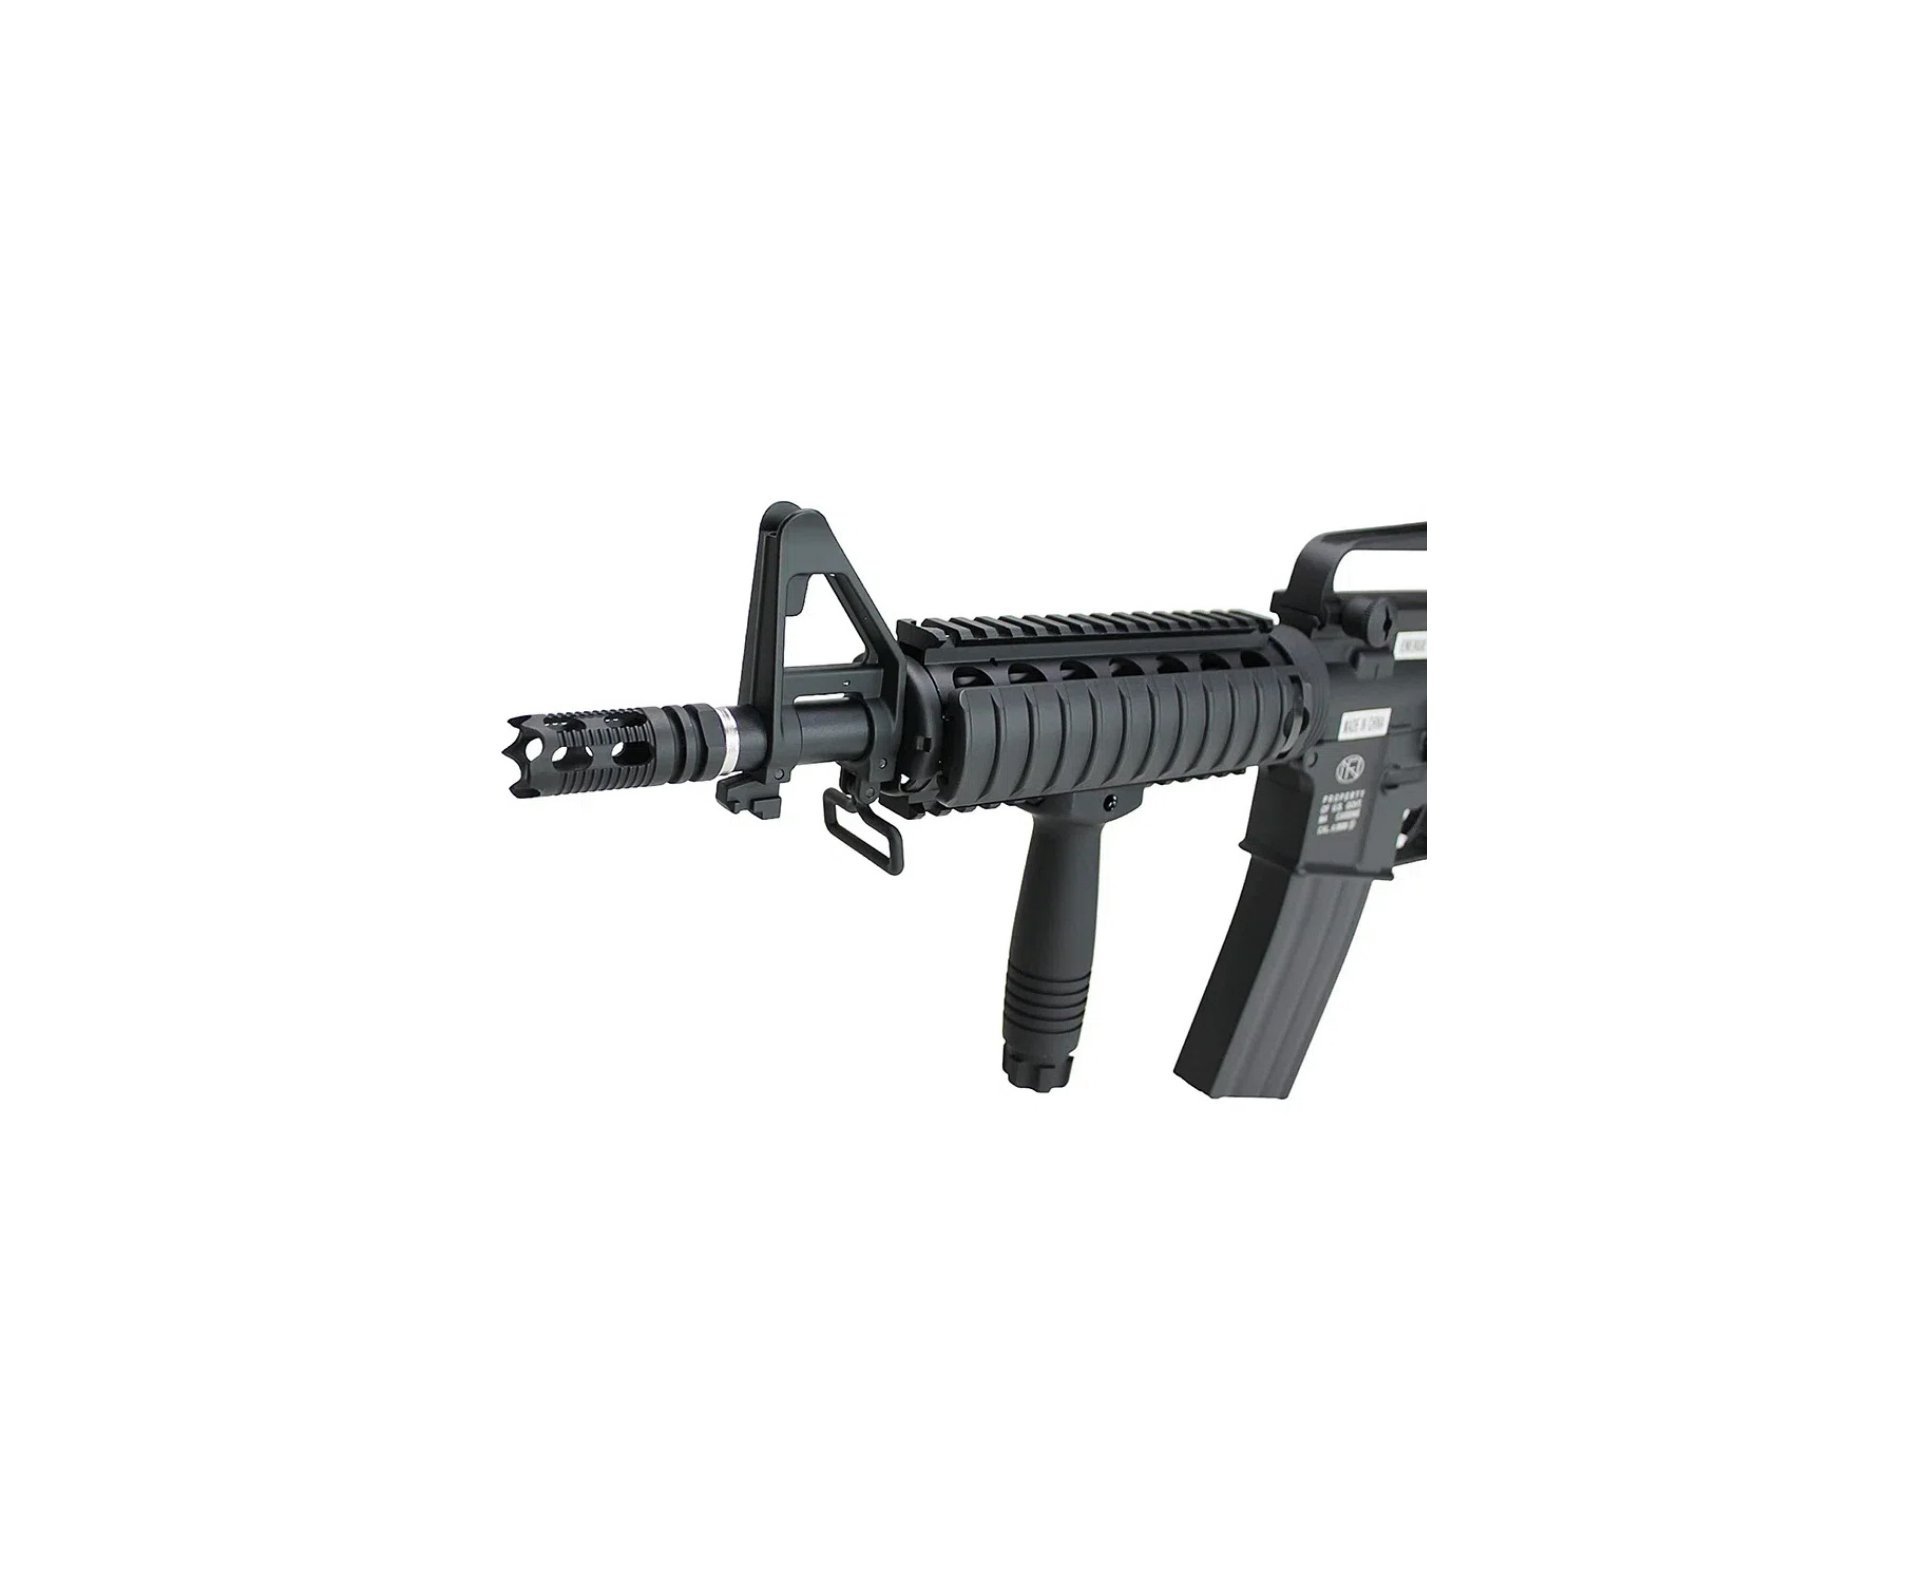 Rifle de Pressão Gás CO2 FN Herstal M4 RIS Full Metal 4.5mm - Cybergun + Co2 + Óleo de silicone + Esferas + Capa